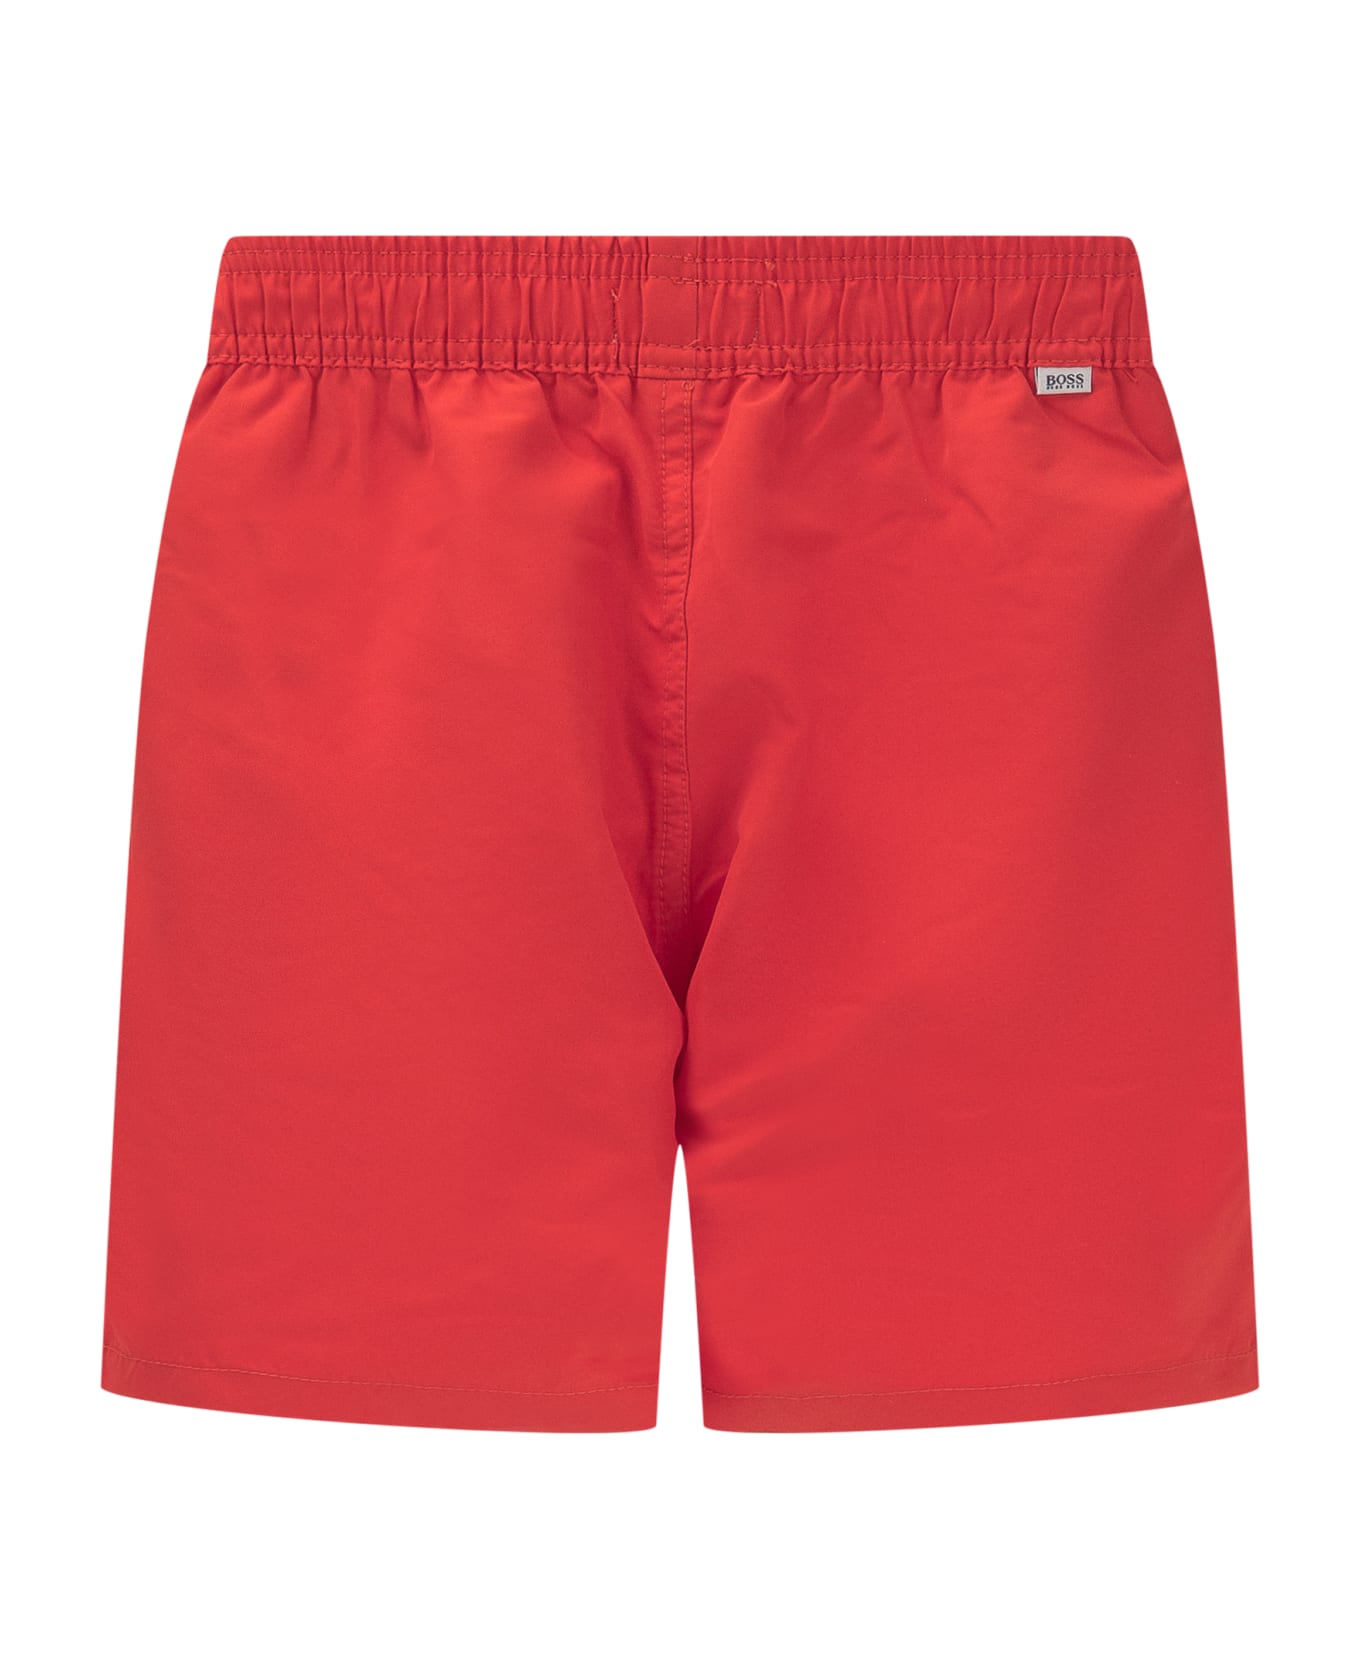 Hugo Boss Swim Shorts - 992